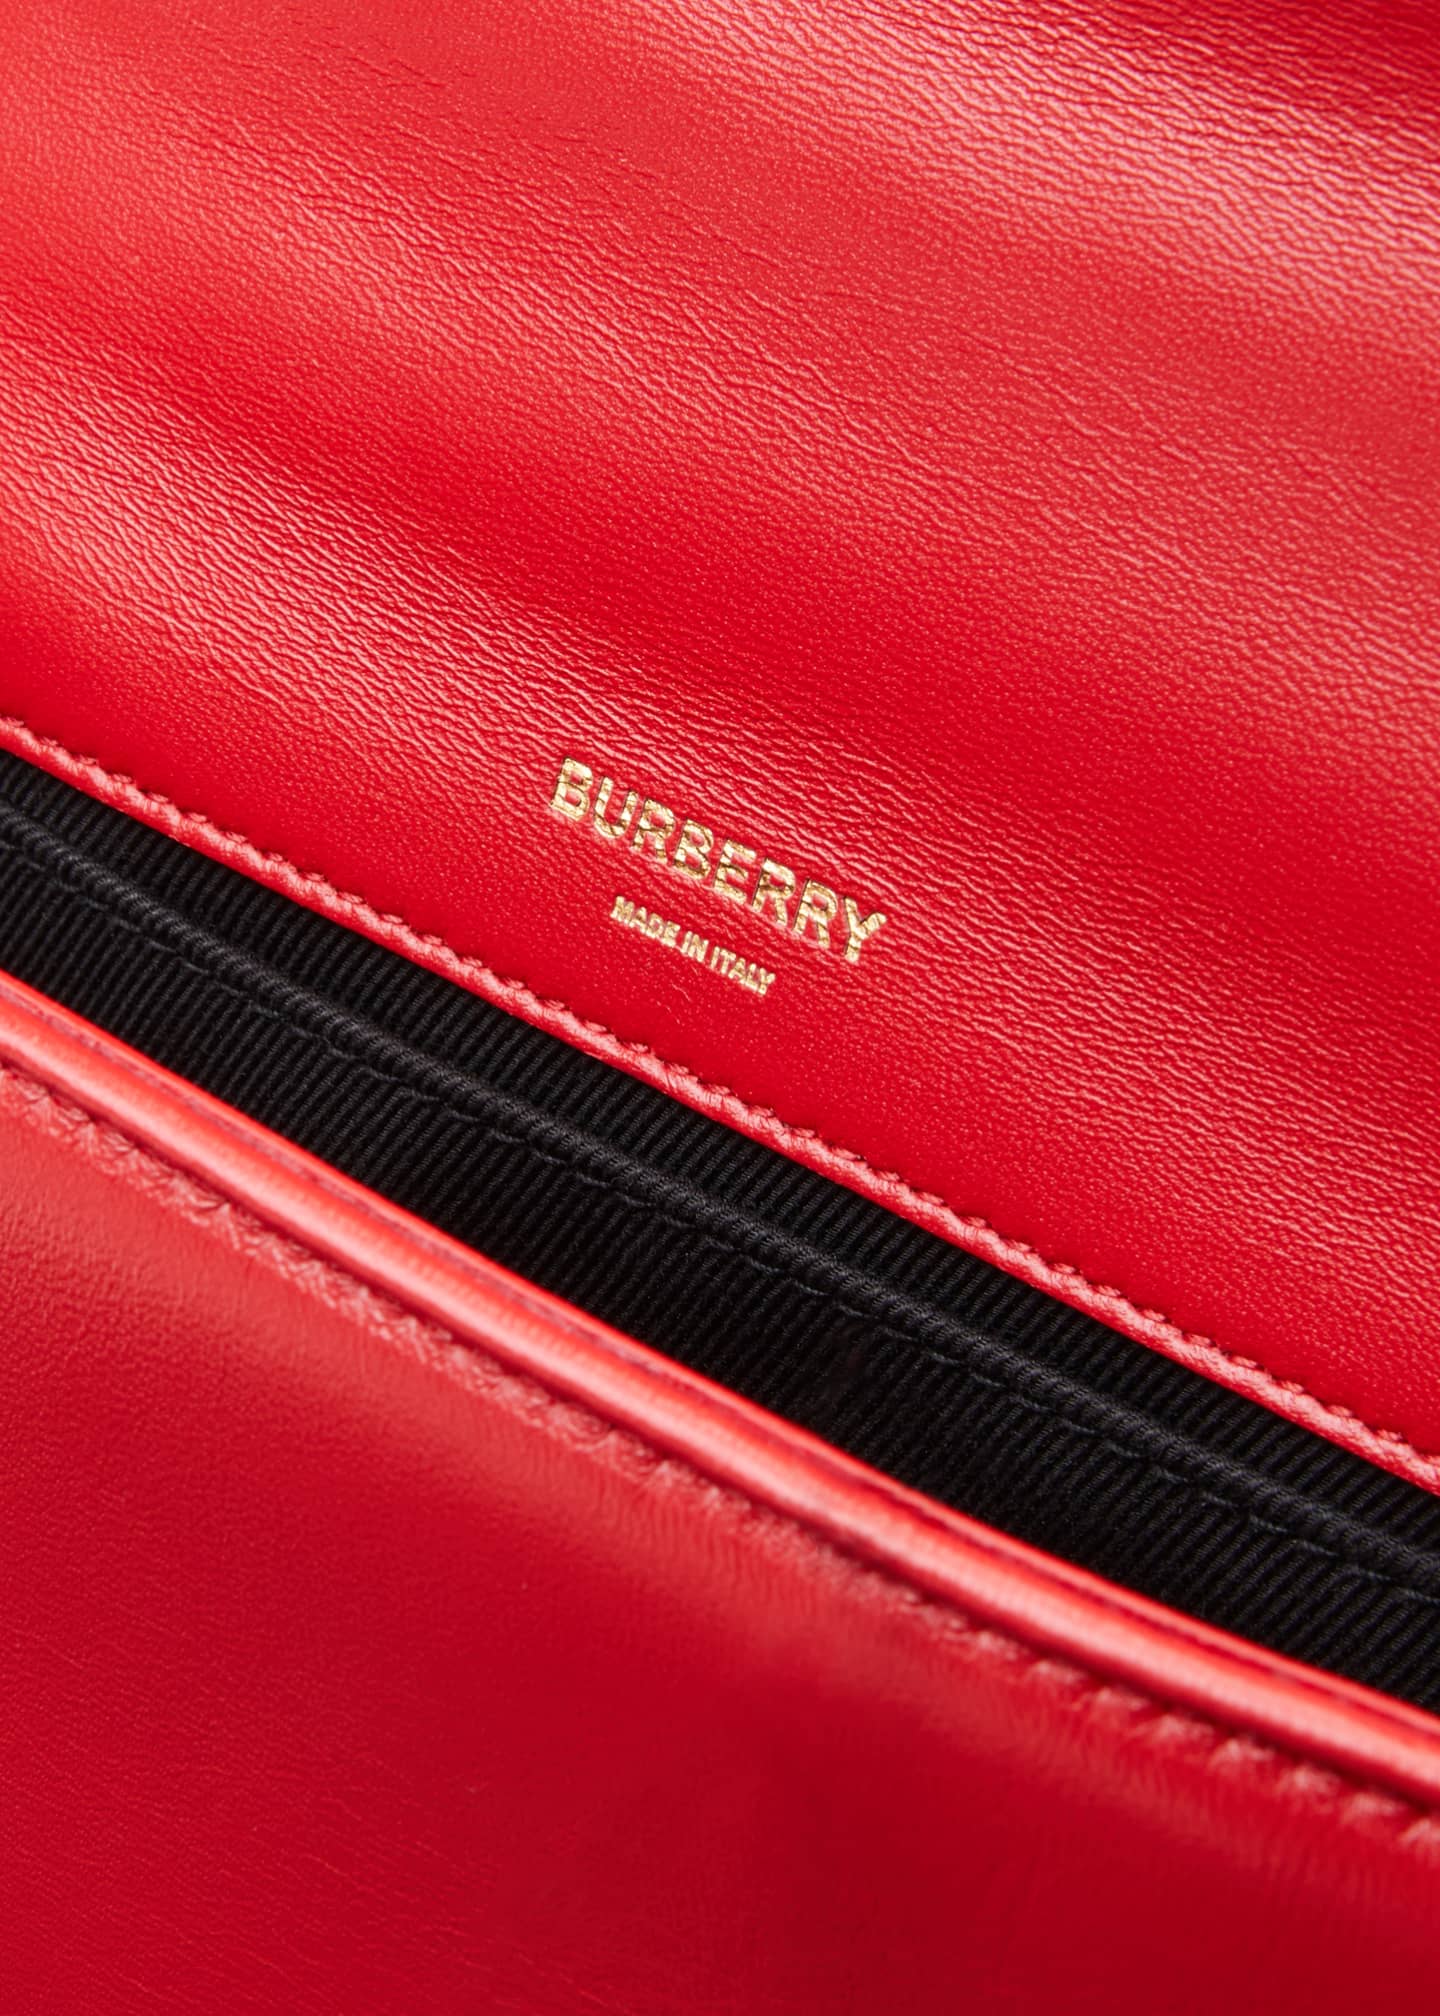 Burberry Handbag LOLA SMALL Calfskin online shopping